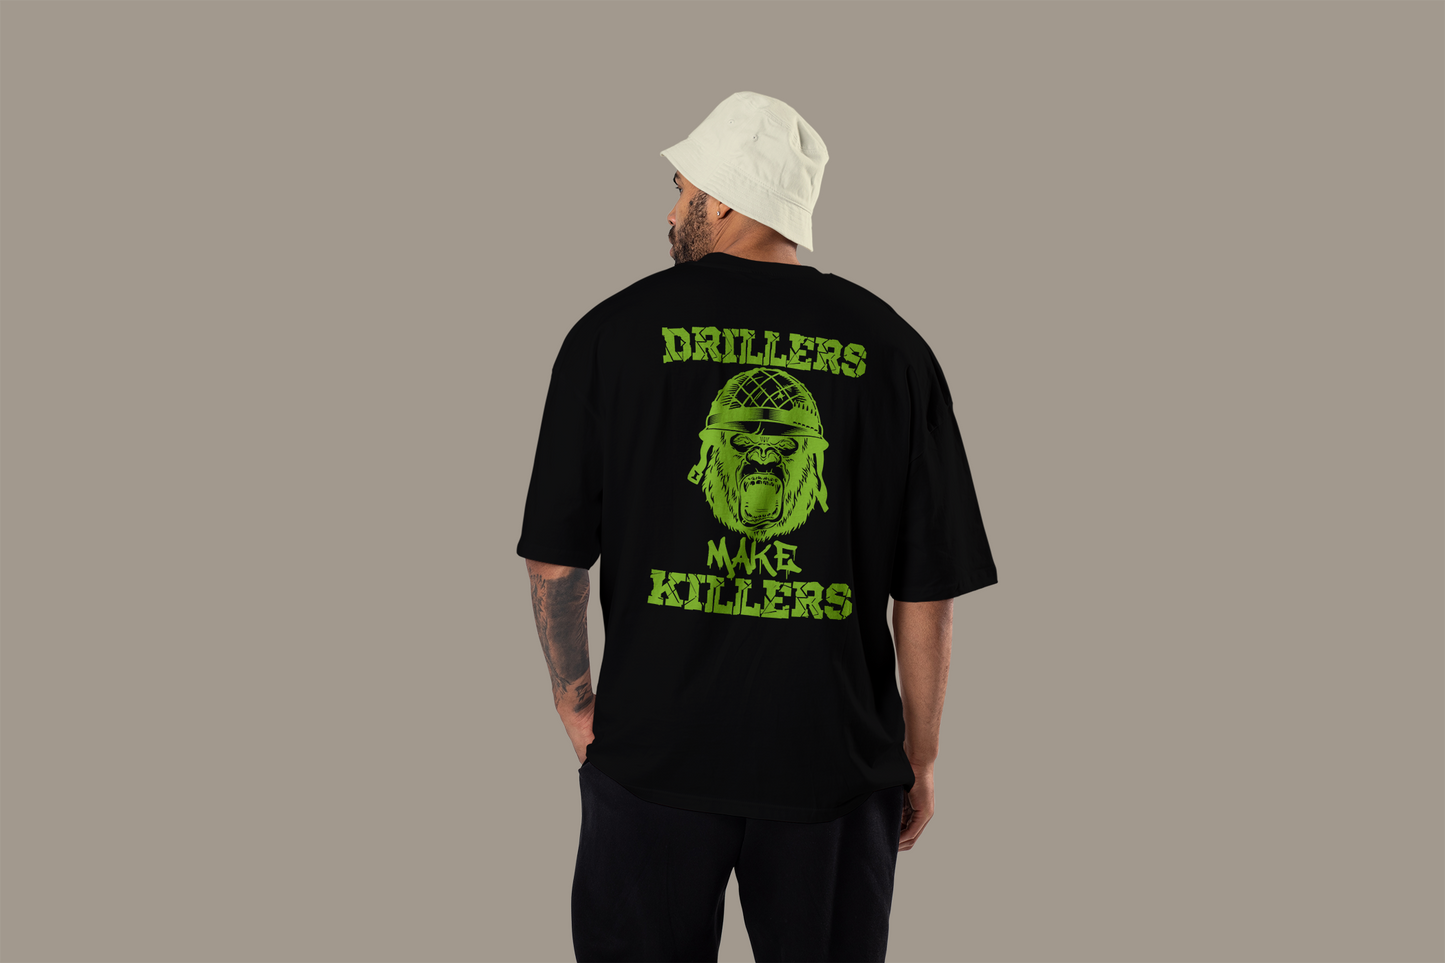 Drillers Make Killers - Black/Green